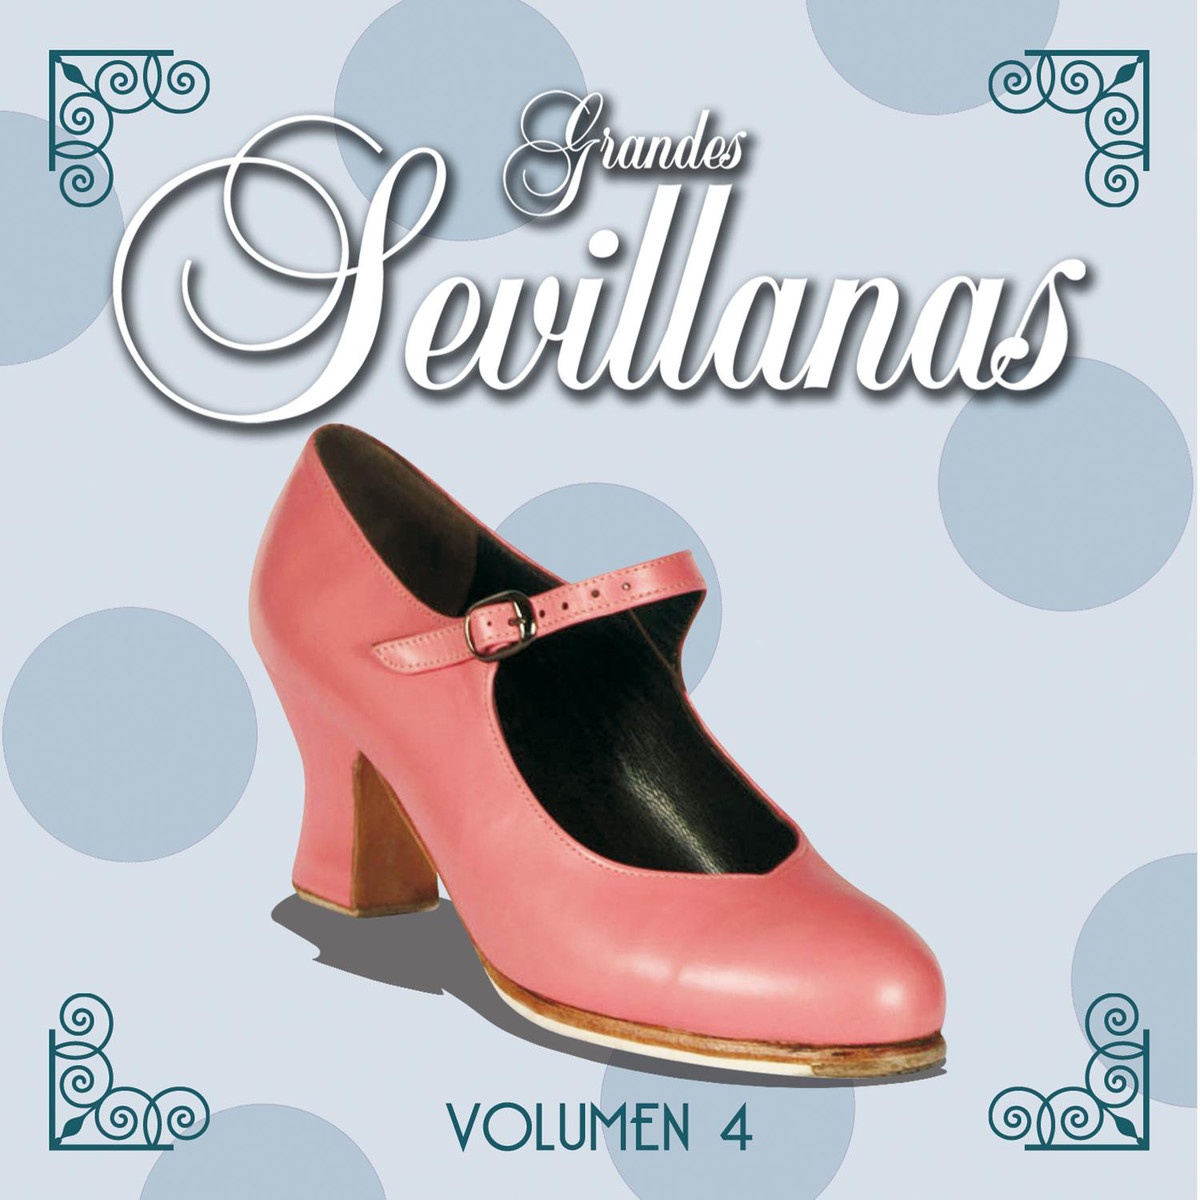 Grandes Sevillanas - Vol. 4